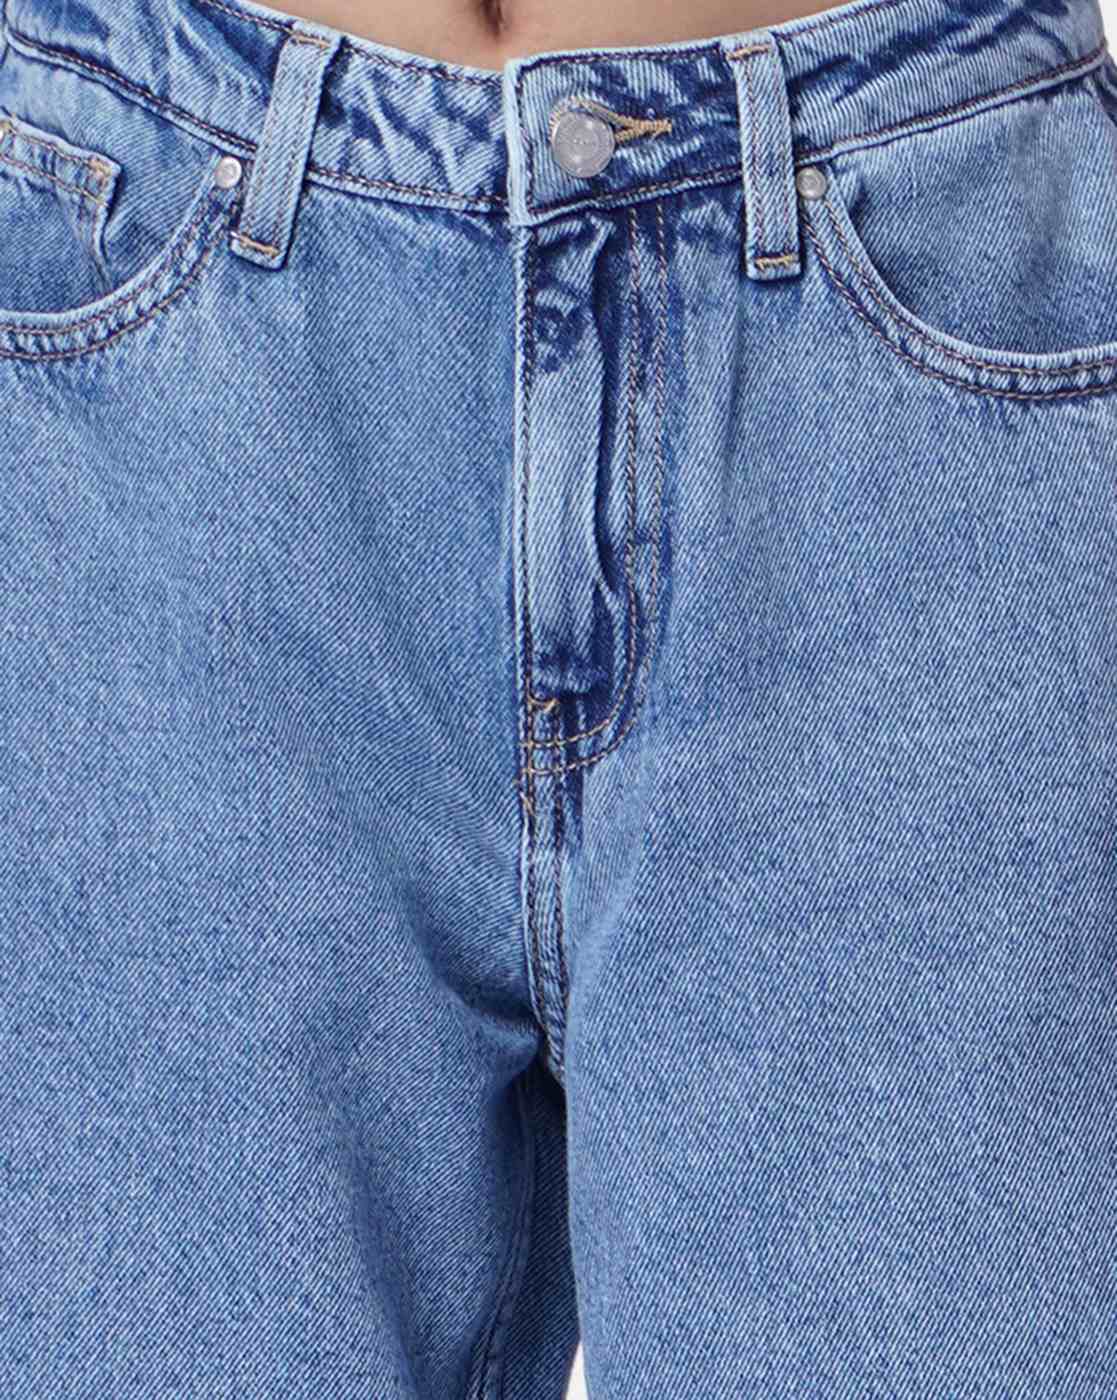 Rue 21 Freedom Flex Low Rise Jegging Light Acid Wash Skinny Jeans